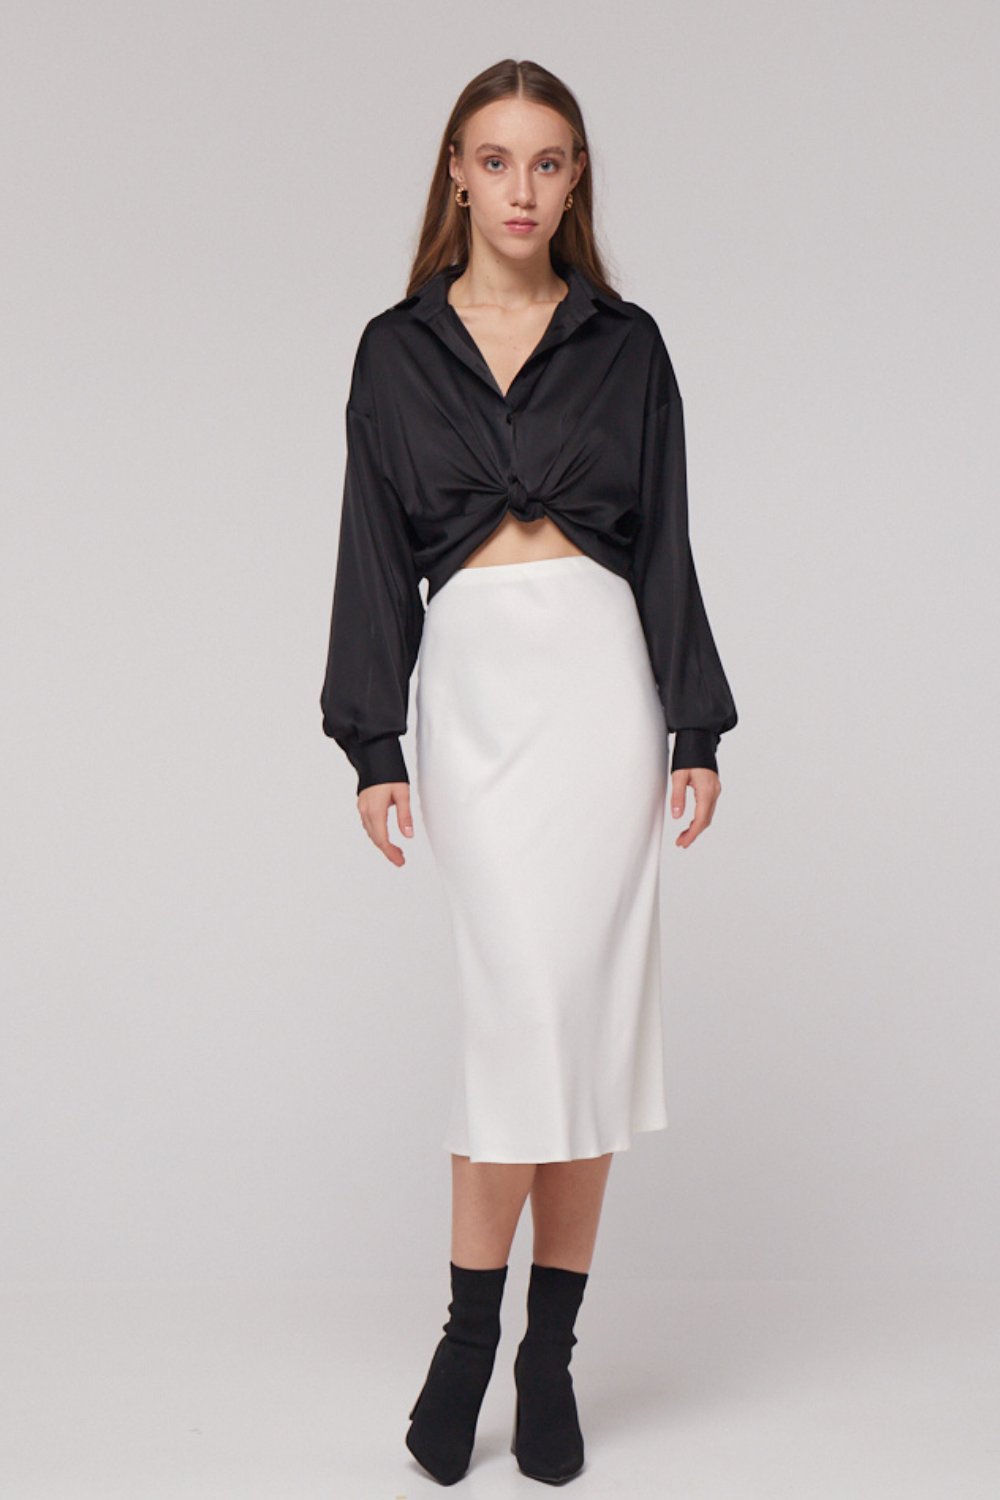 Milk White Silk Skirt With Elastic Waist (Mint) 21710